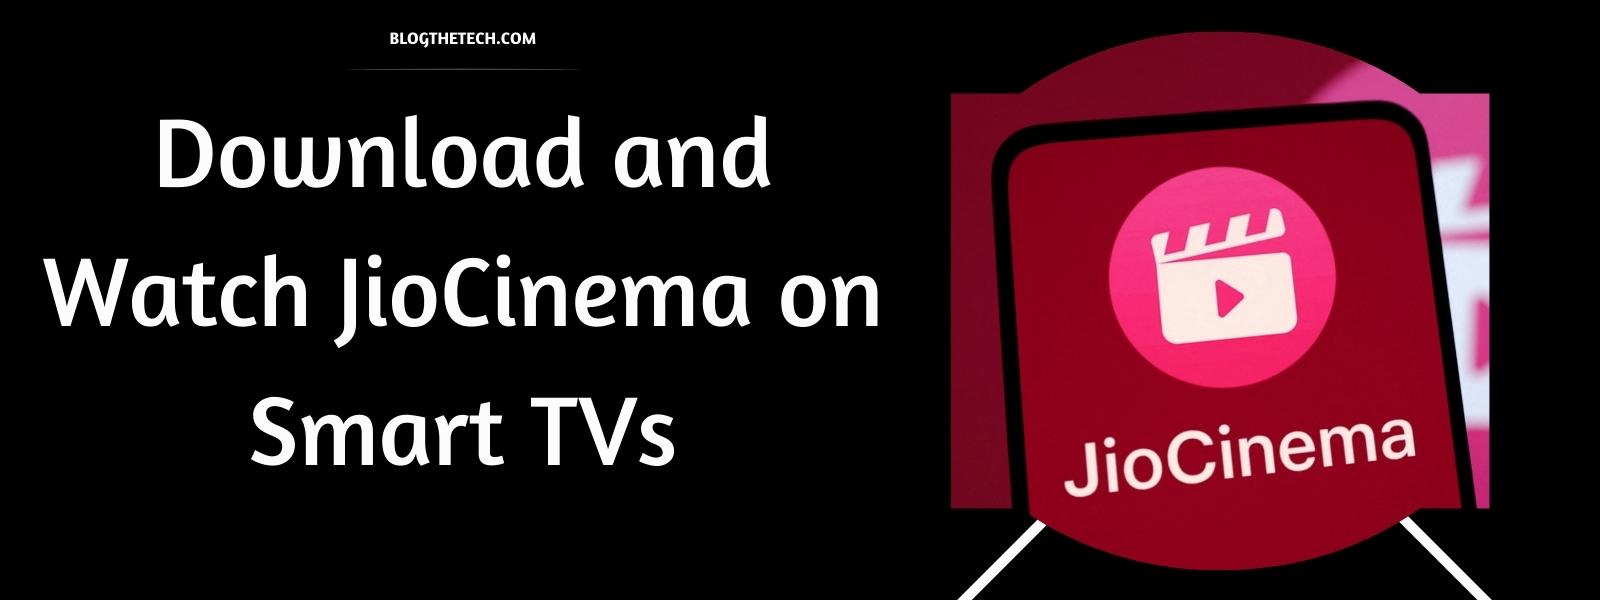 Download Watch JioCinema Smart TVs-featured